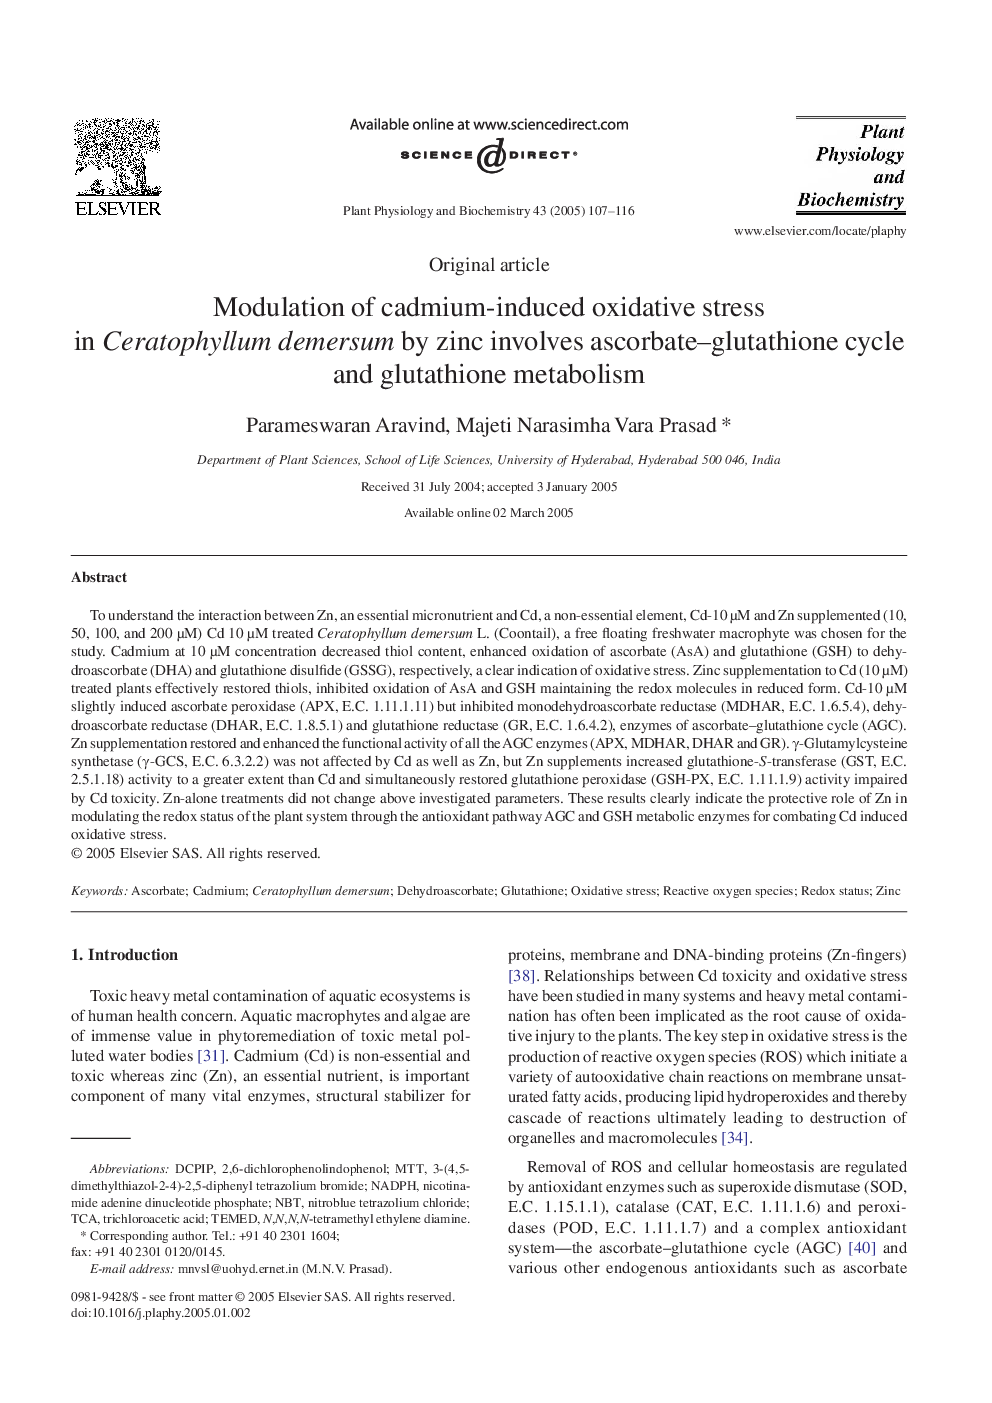 Modulation of cadmium-induced oxidative stress in Ceratophyllum demersum by zinc involves ascorbate-glutathione cycle and glutathione metabolism